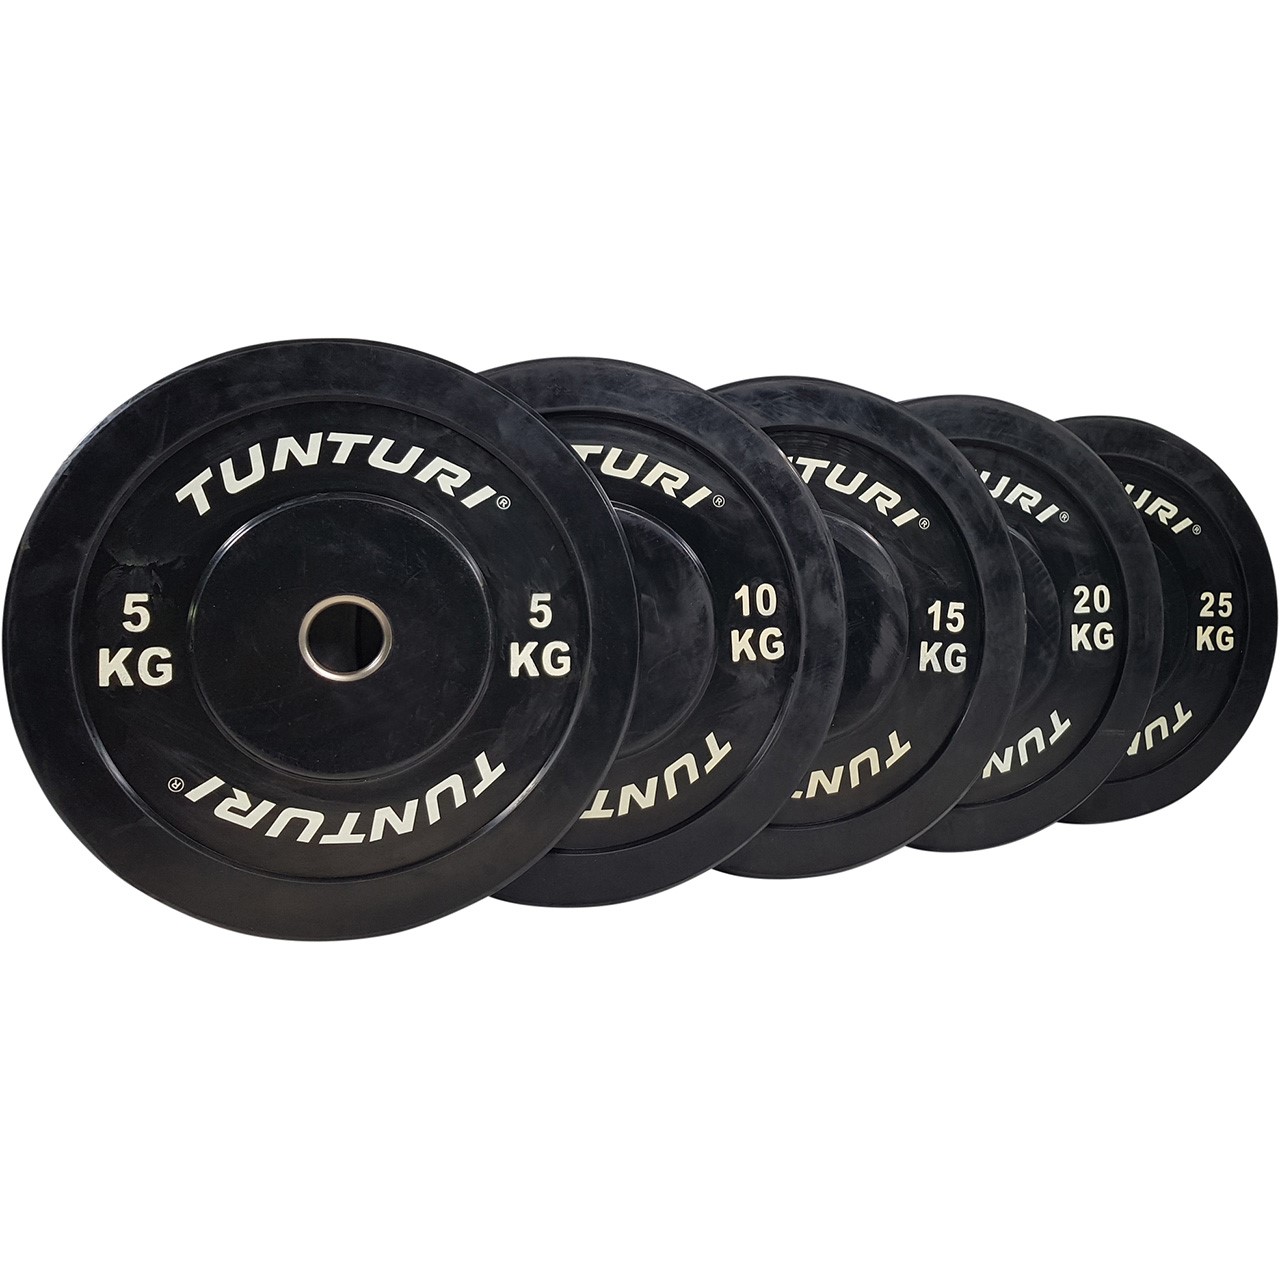 Tunturi Bumper Plate Weight Plates 50 mm 5 kg Single